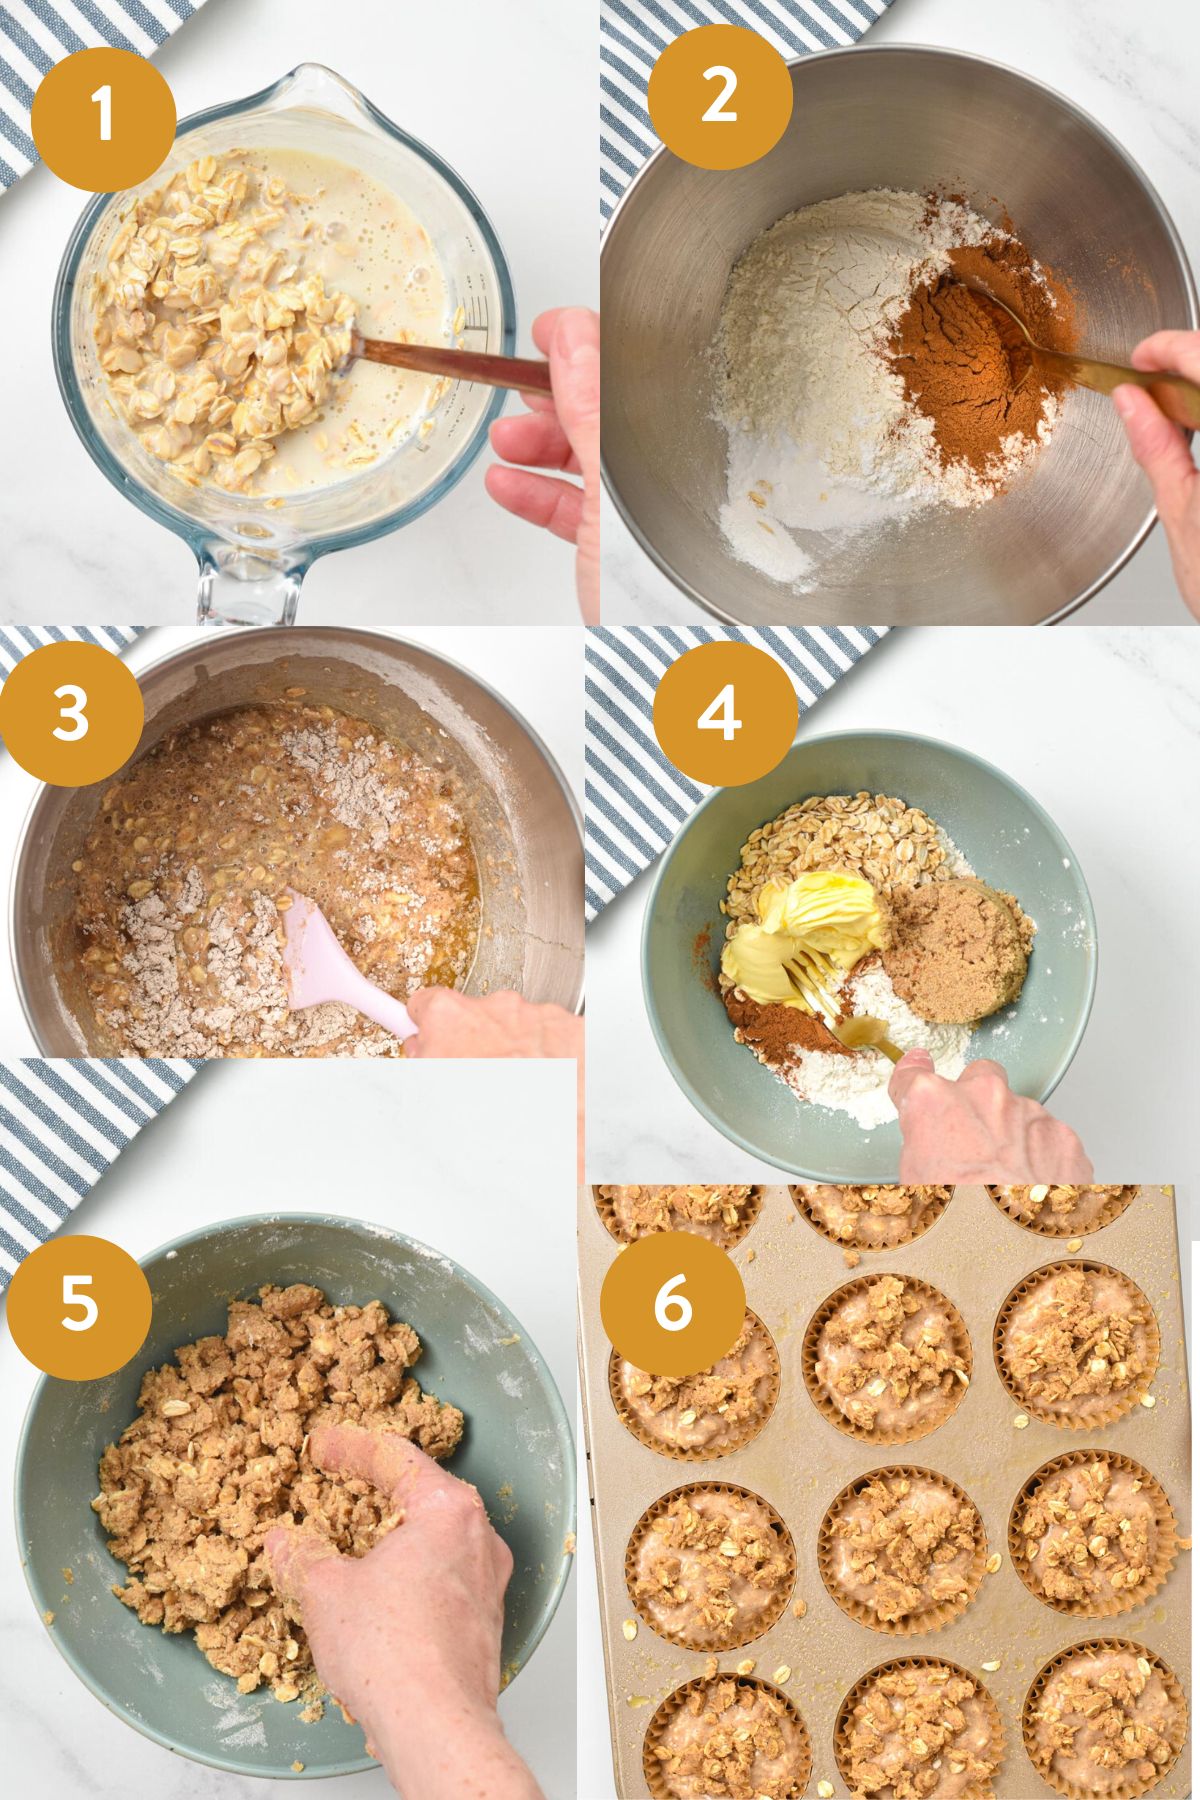 How To Make Oatmeal Cinnamon Muffins